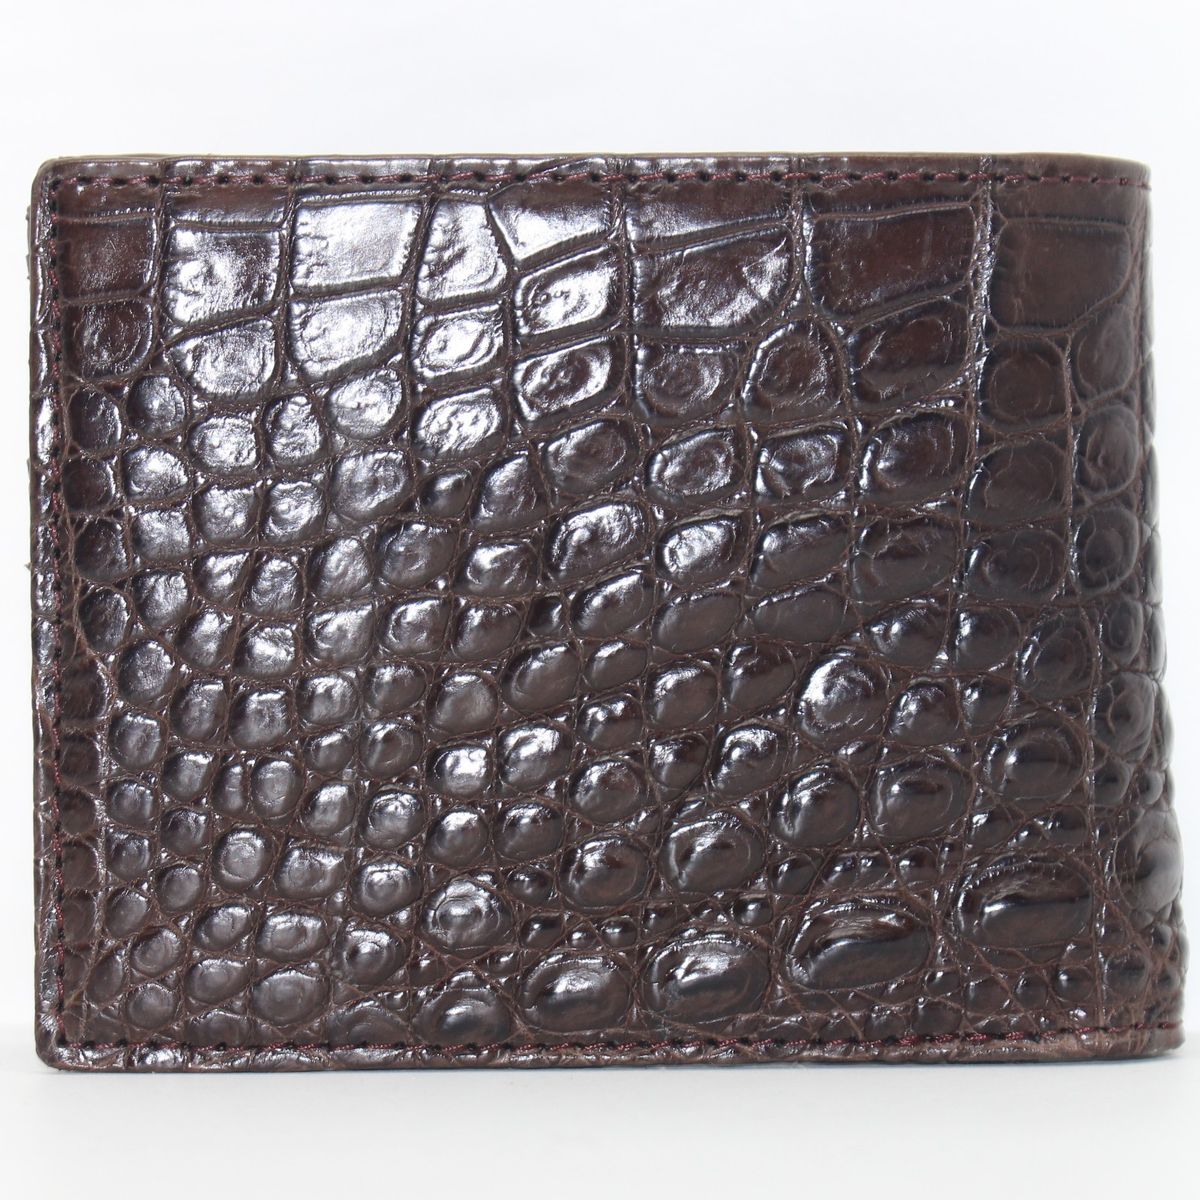 Classic Crocodile Wallet, Genuine Full Crocodile Skin Wallet for Men, Dark Brown  | eBay